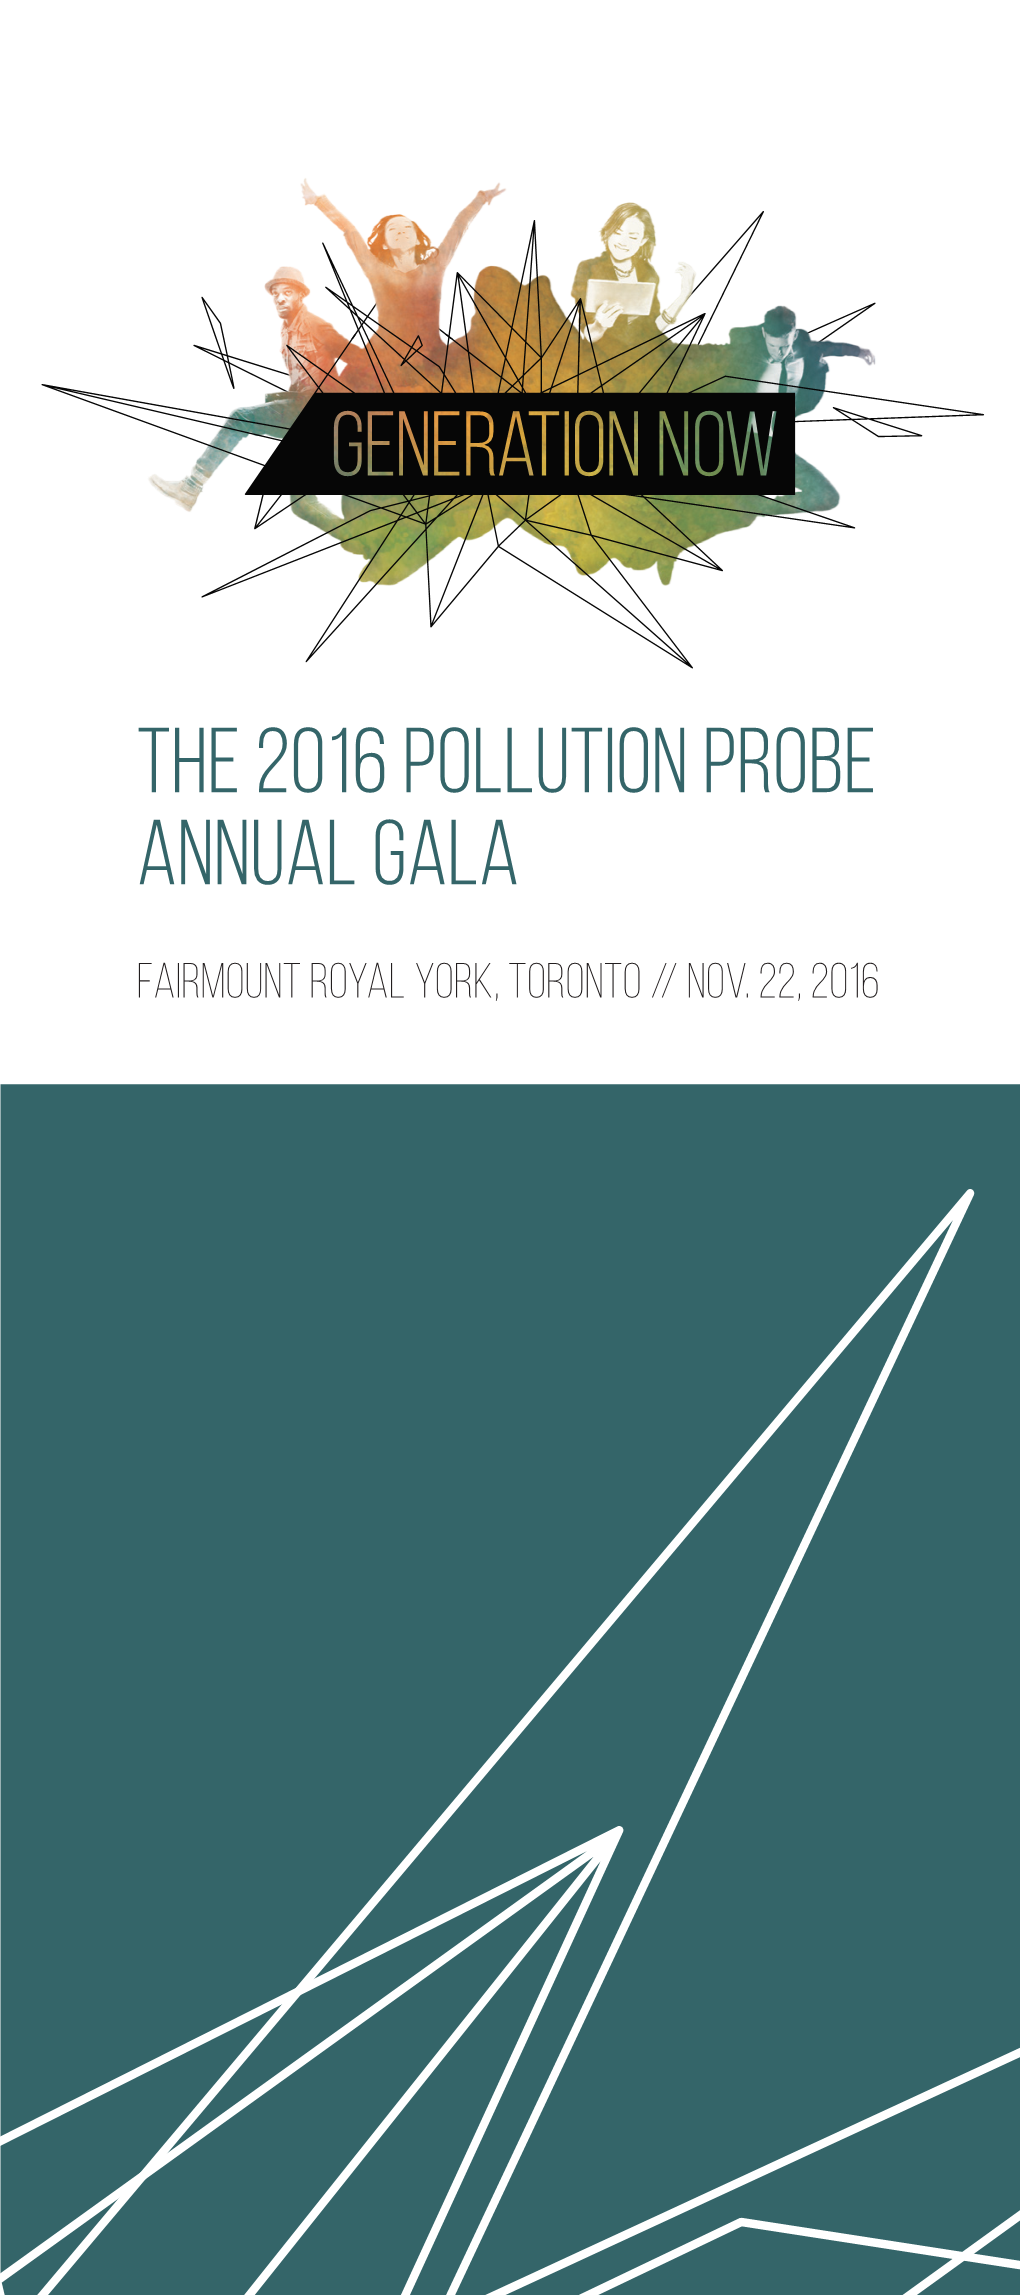 The 2016 Pollution Probe Annual Gala